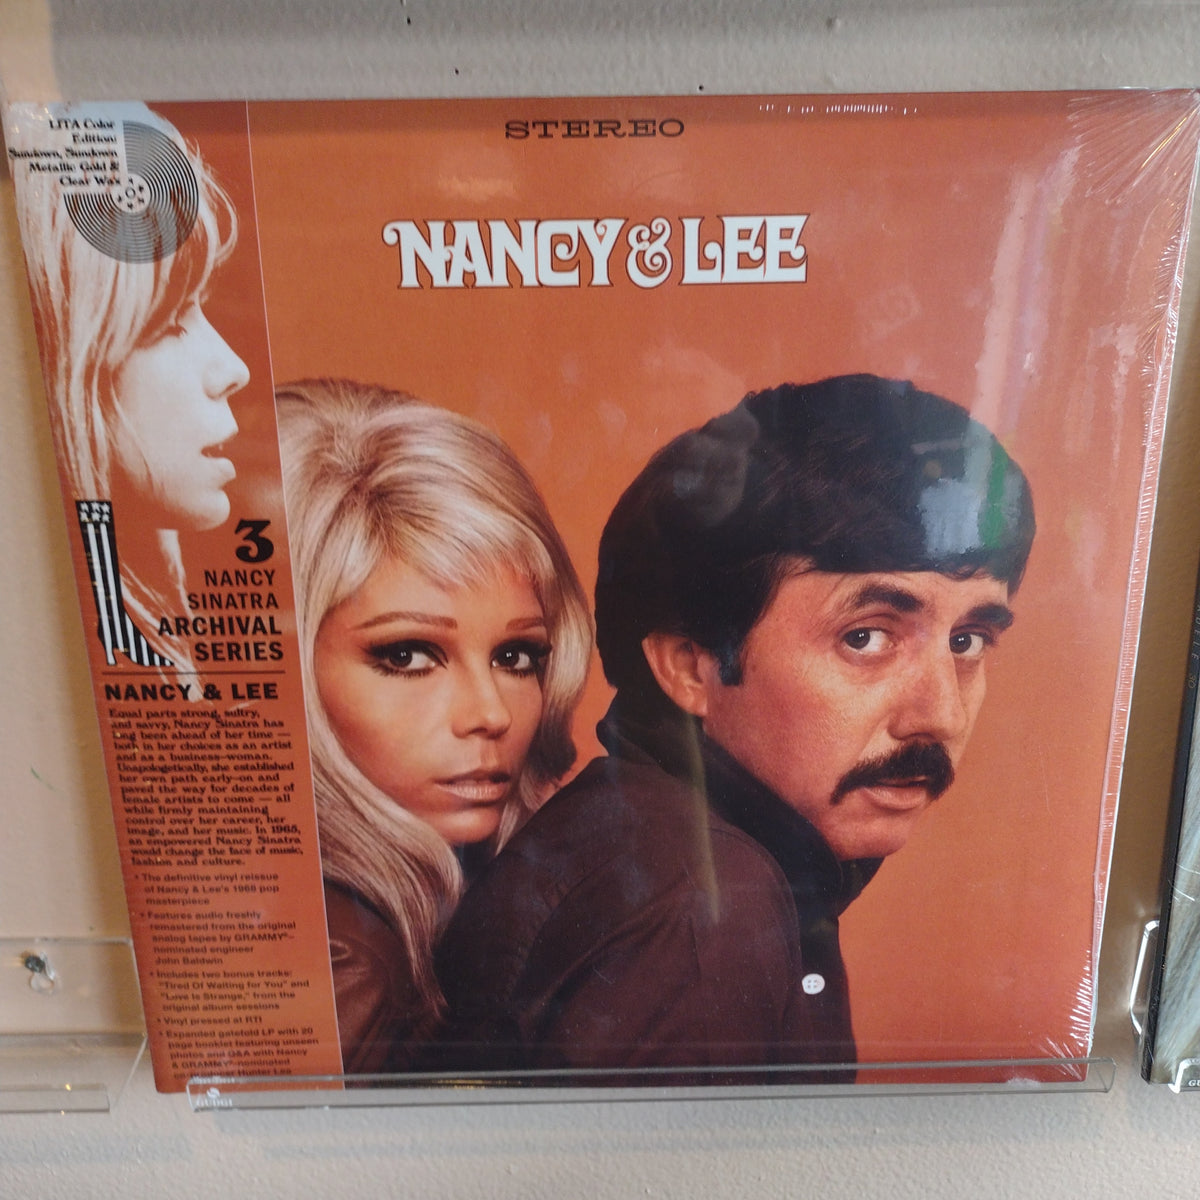 Nancy and lee vinyl record